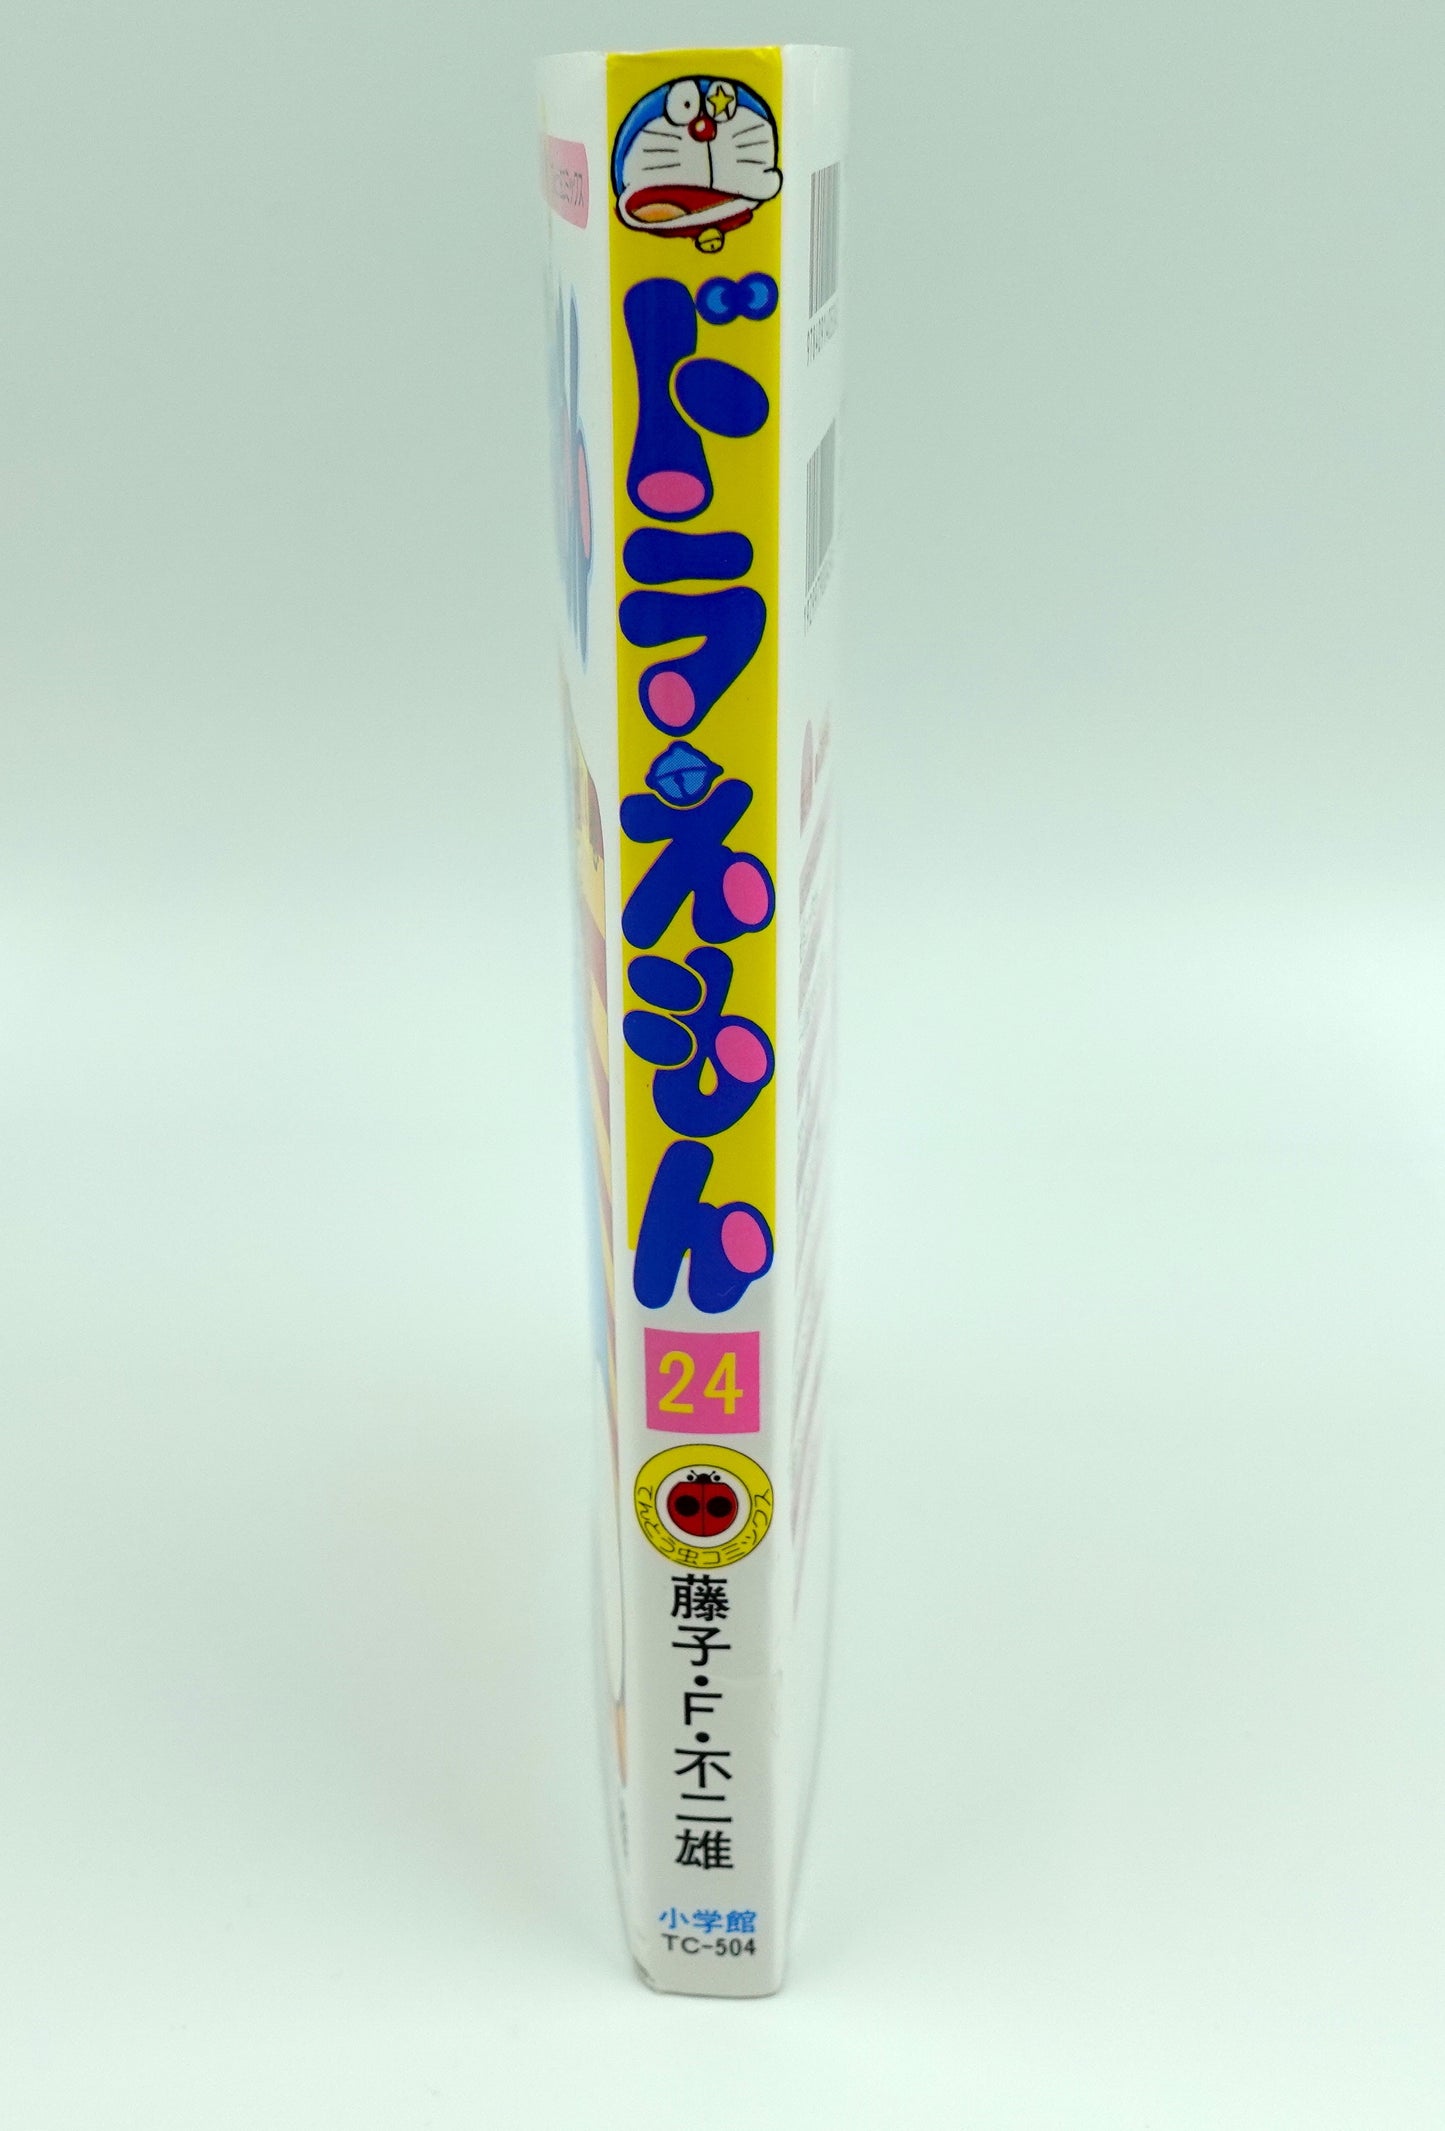 Doraemon Vol.24- Official Japanese Edition